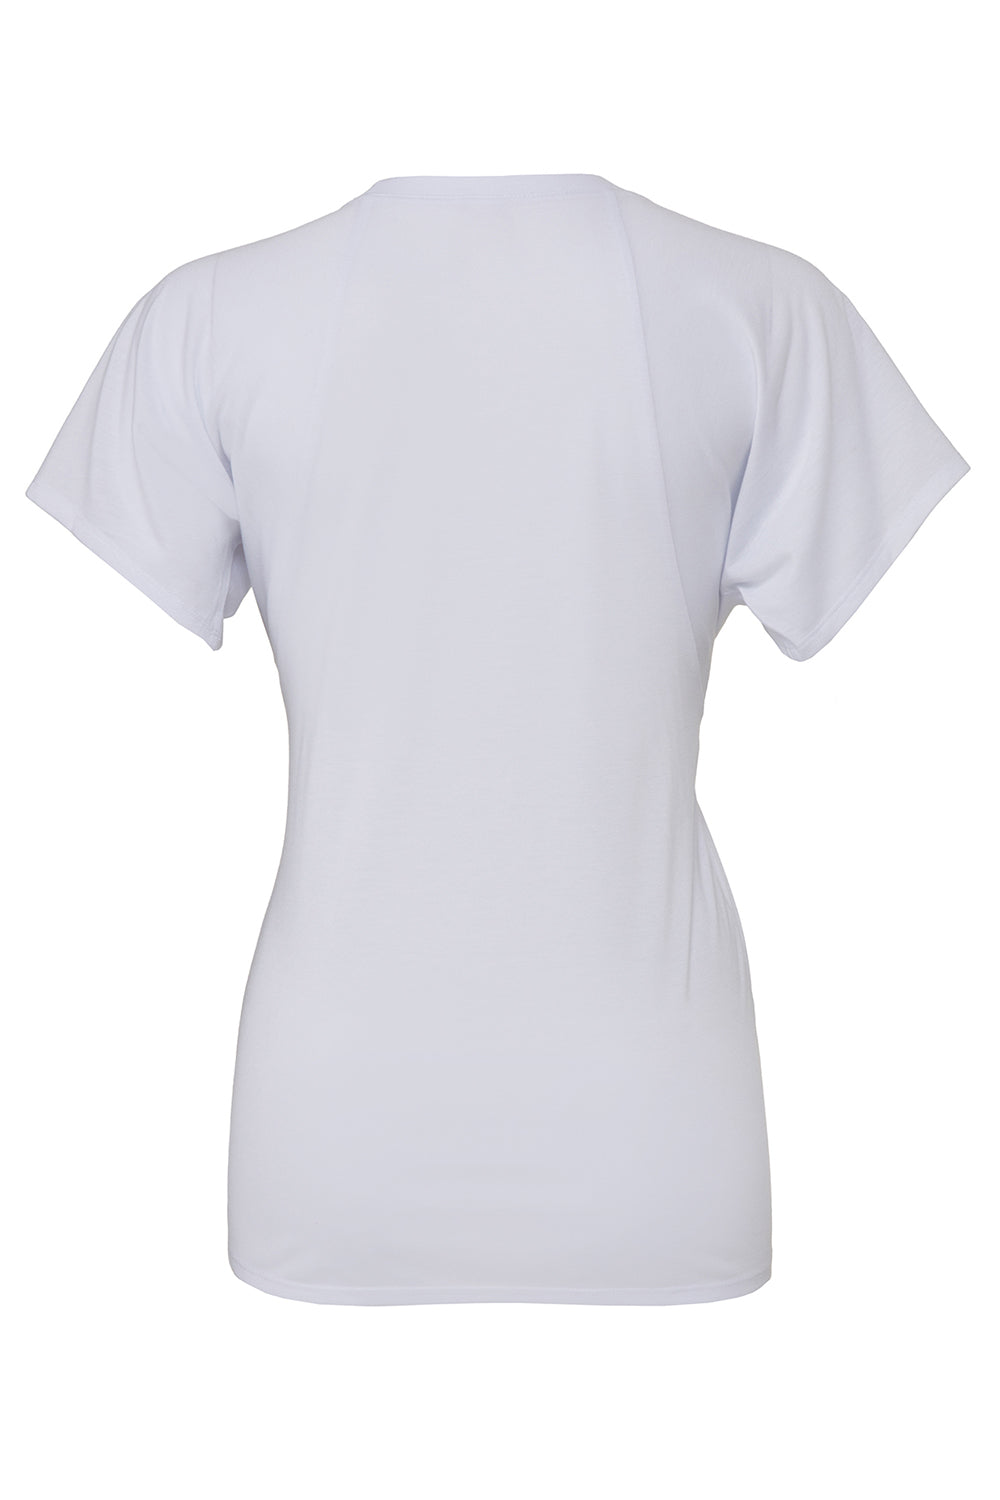 Bella + Canvas B8801/8801 Womens Flowy Short Sleeve Scoop Neck T-Shirt White Flat Back